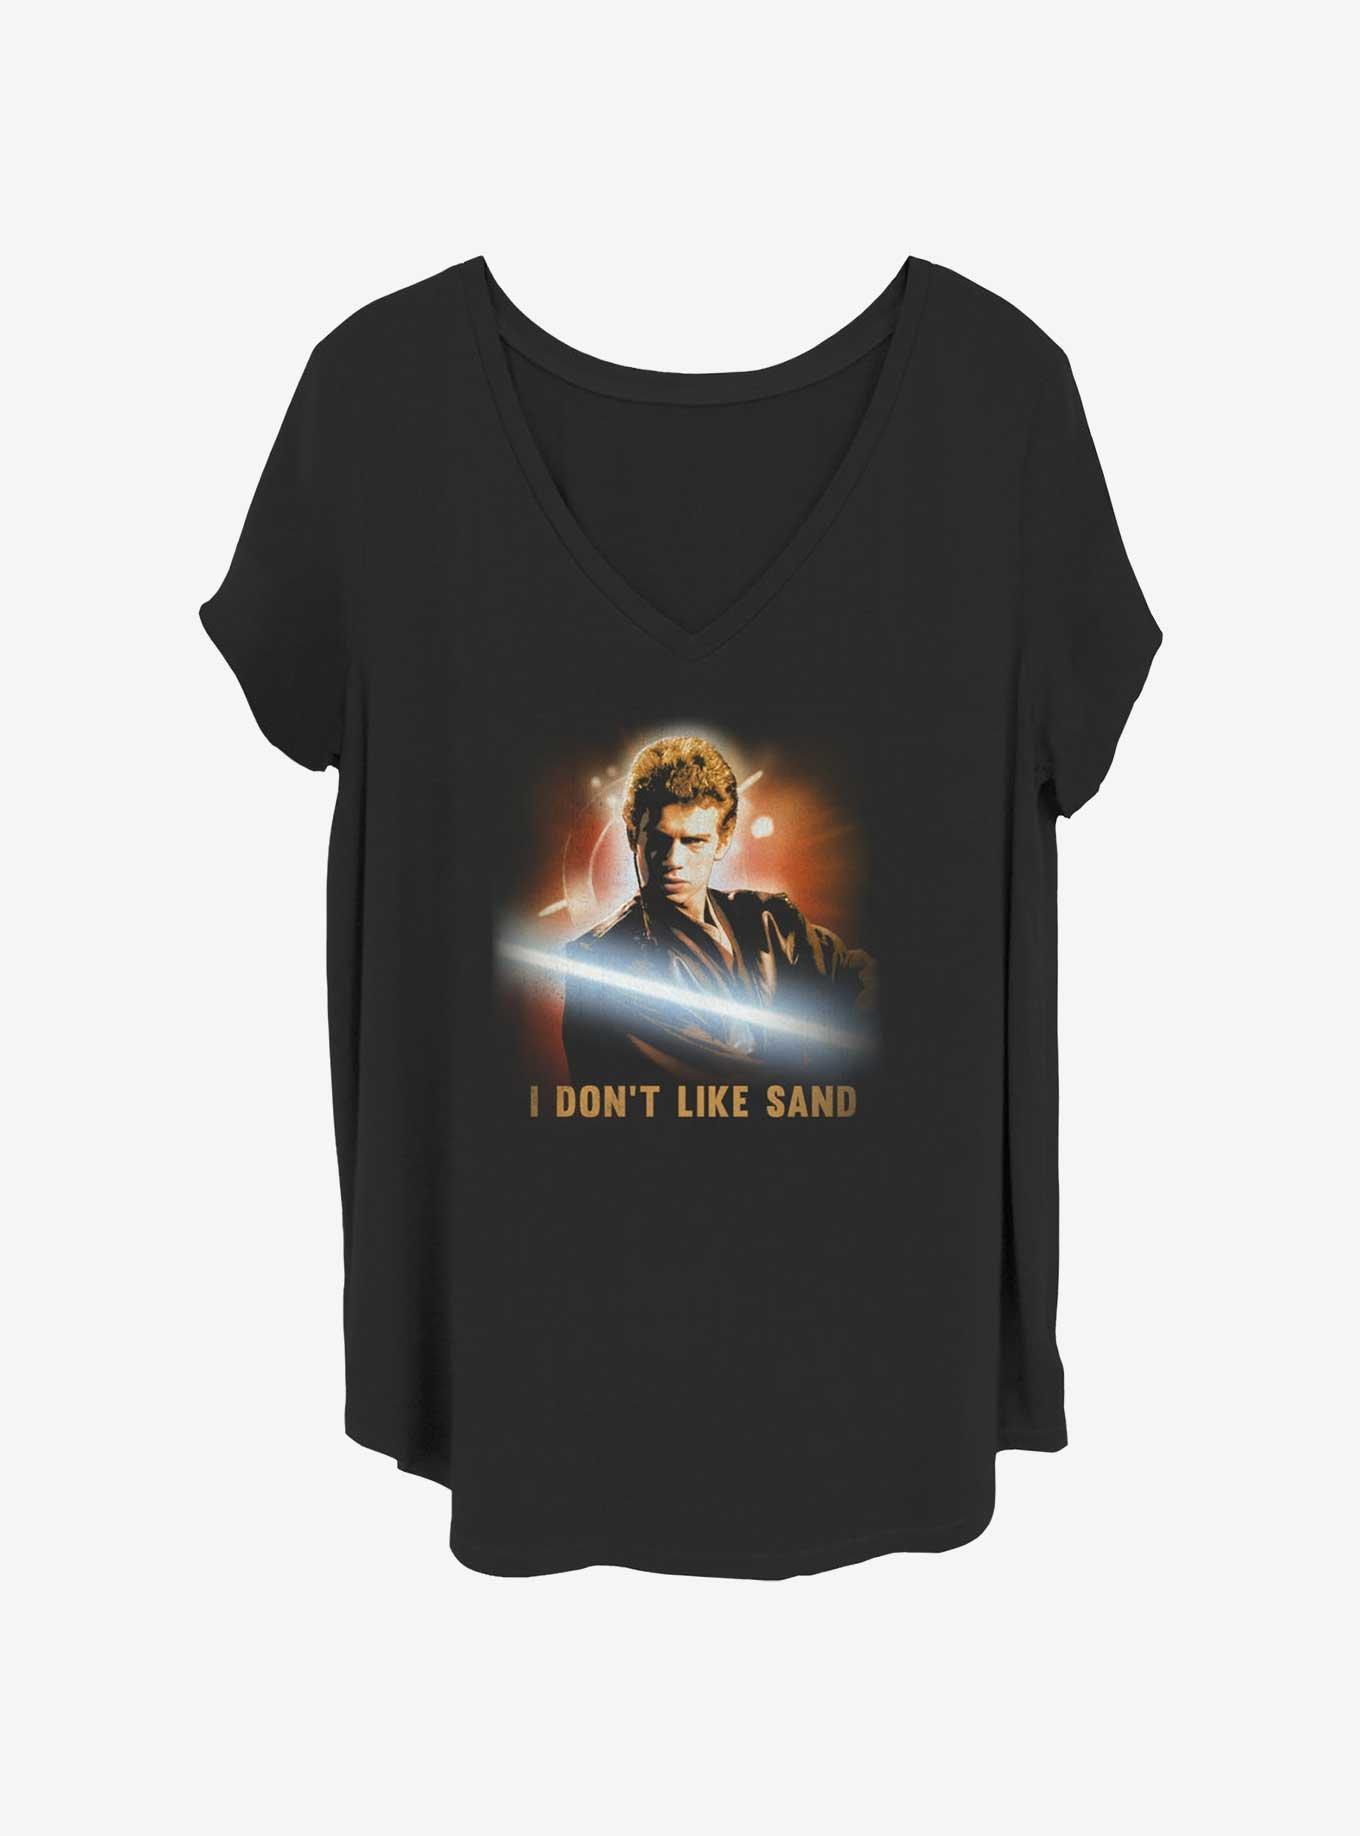 Star Wars Anakin Skywalker I Don't Like Sand Girls T-Shirt Plus